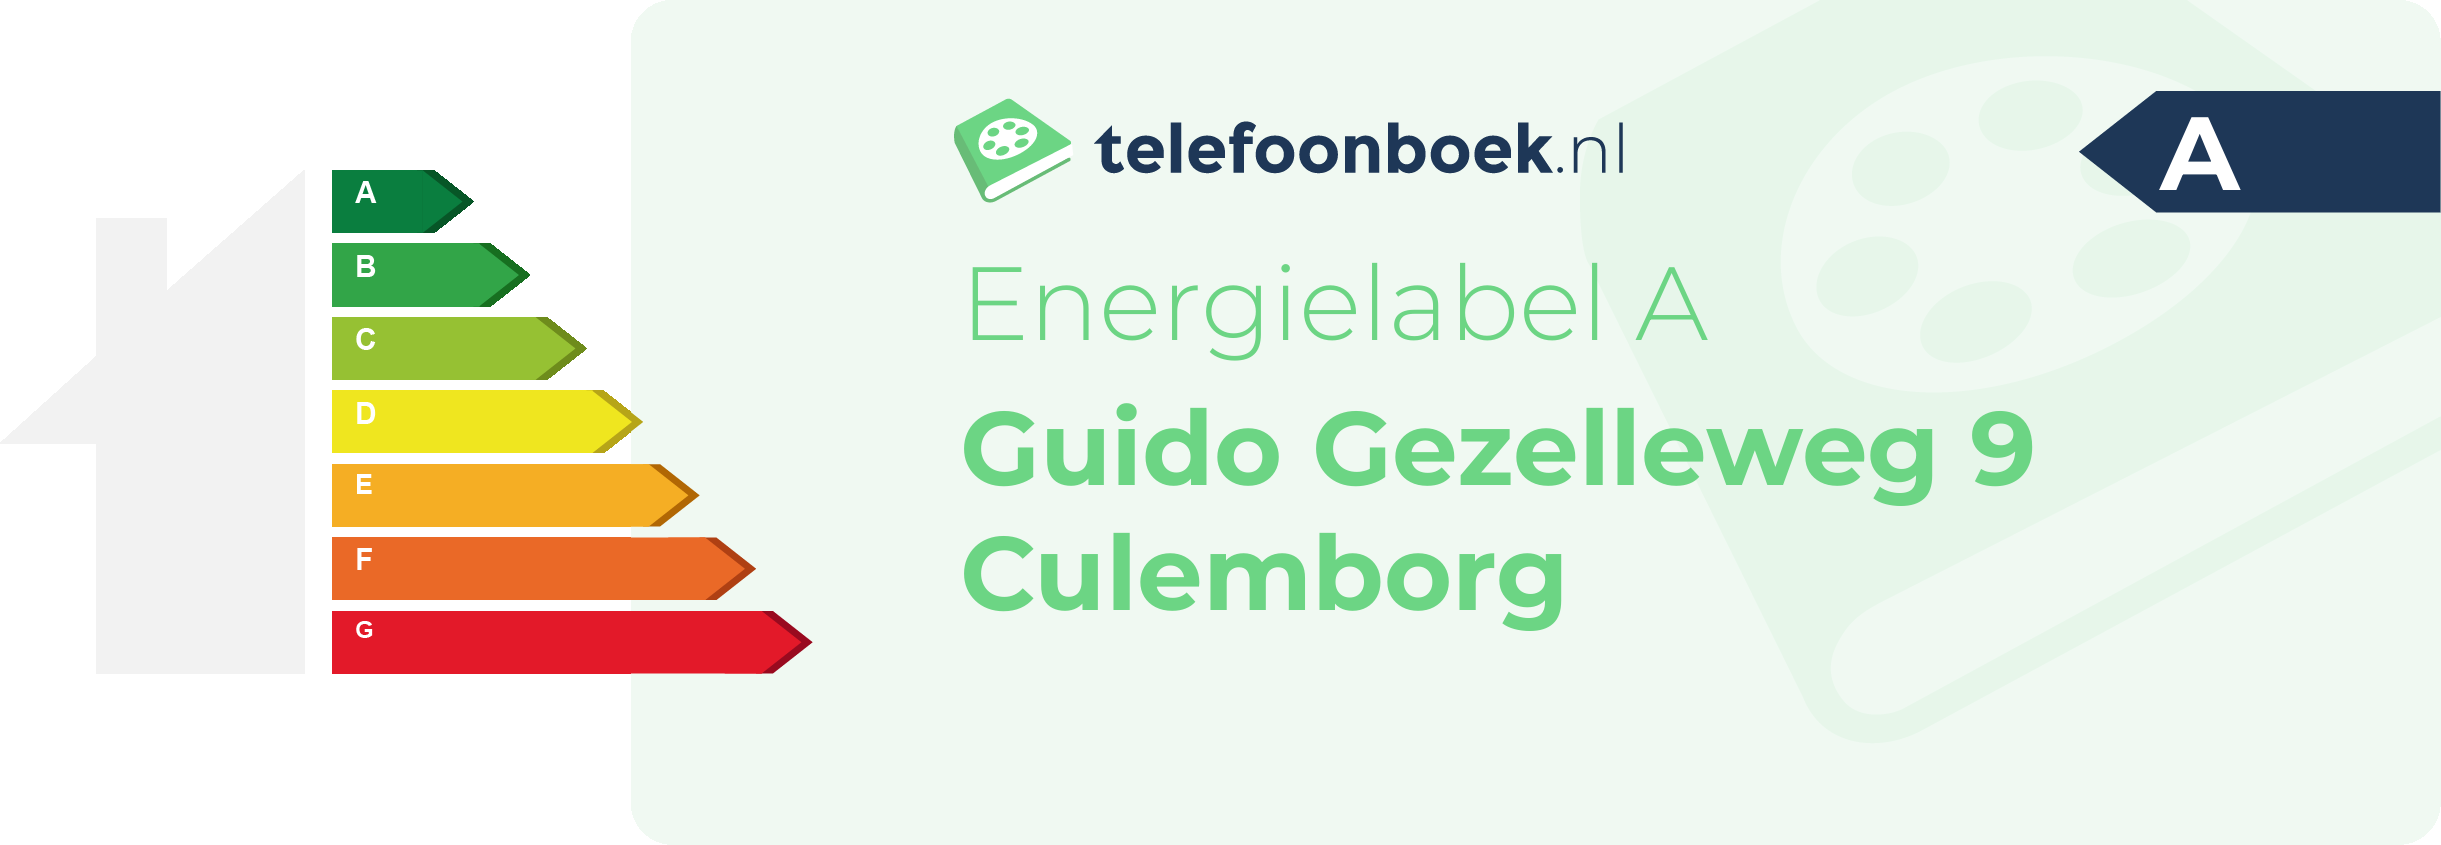 Energielabel Guido Gezelleweg 9 Culemborg